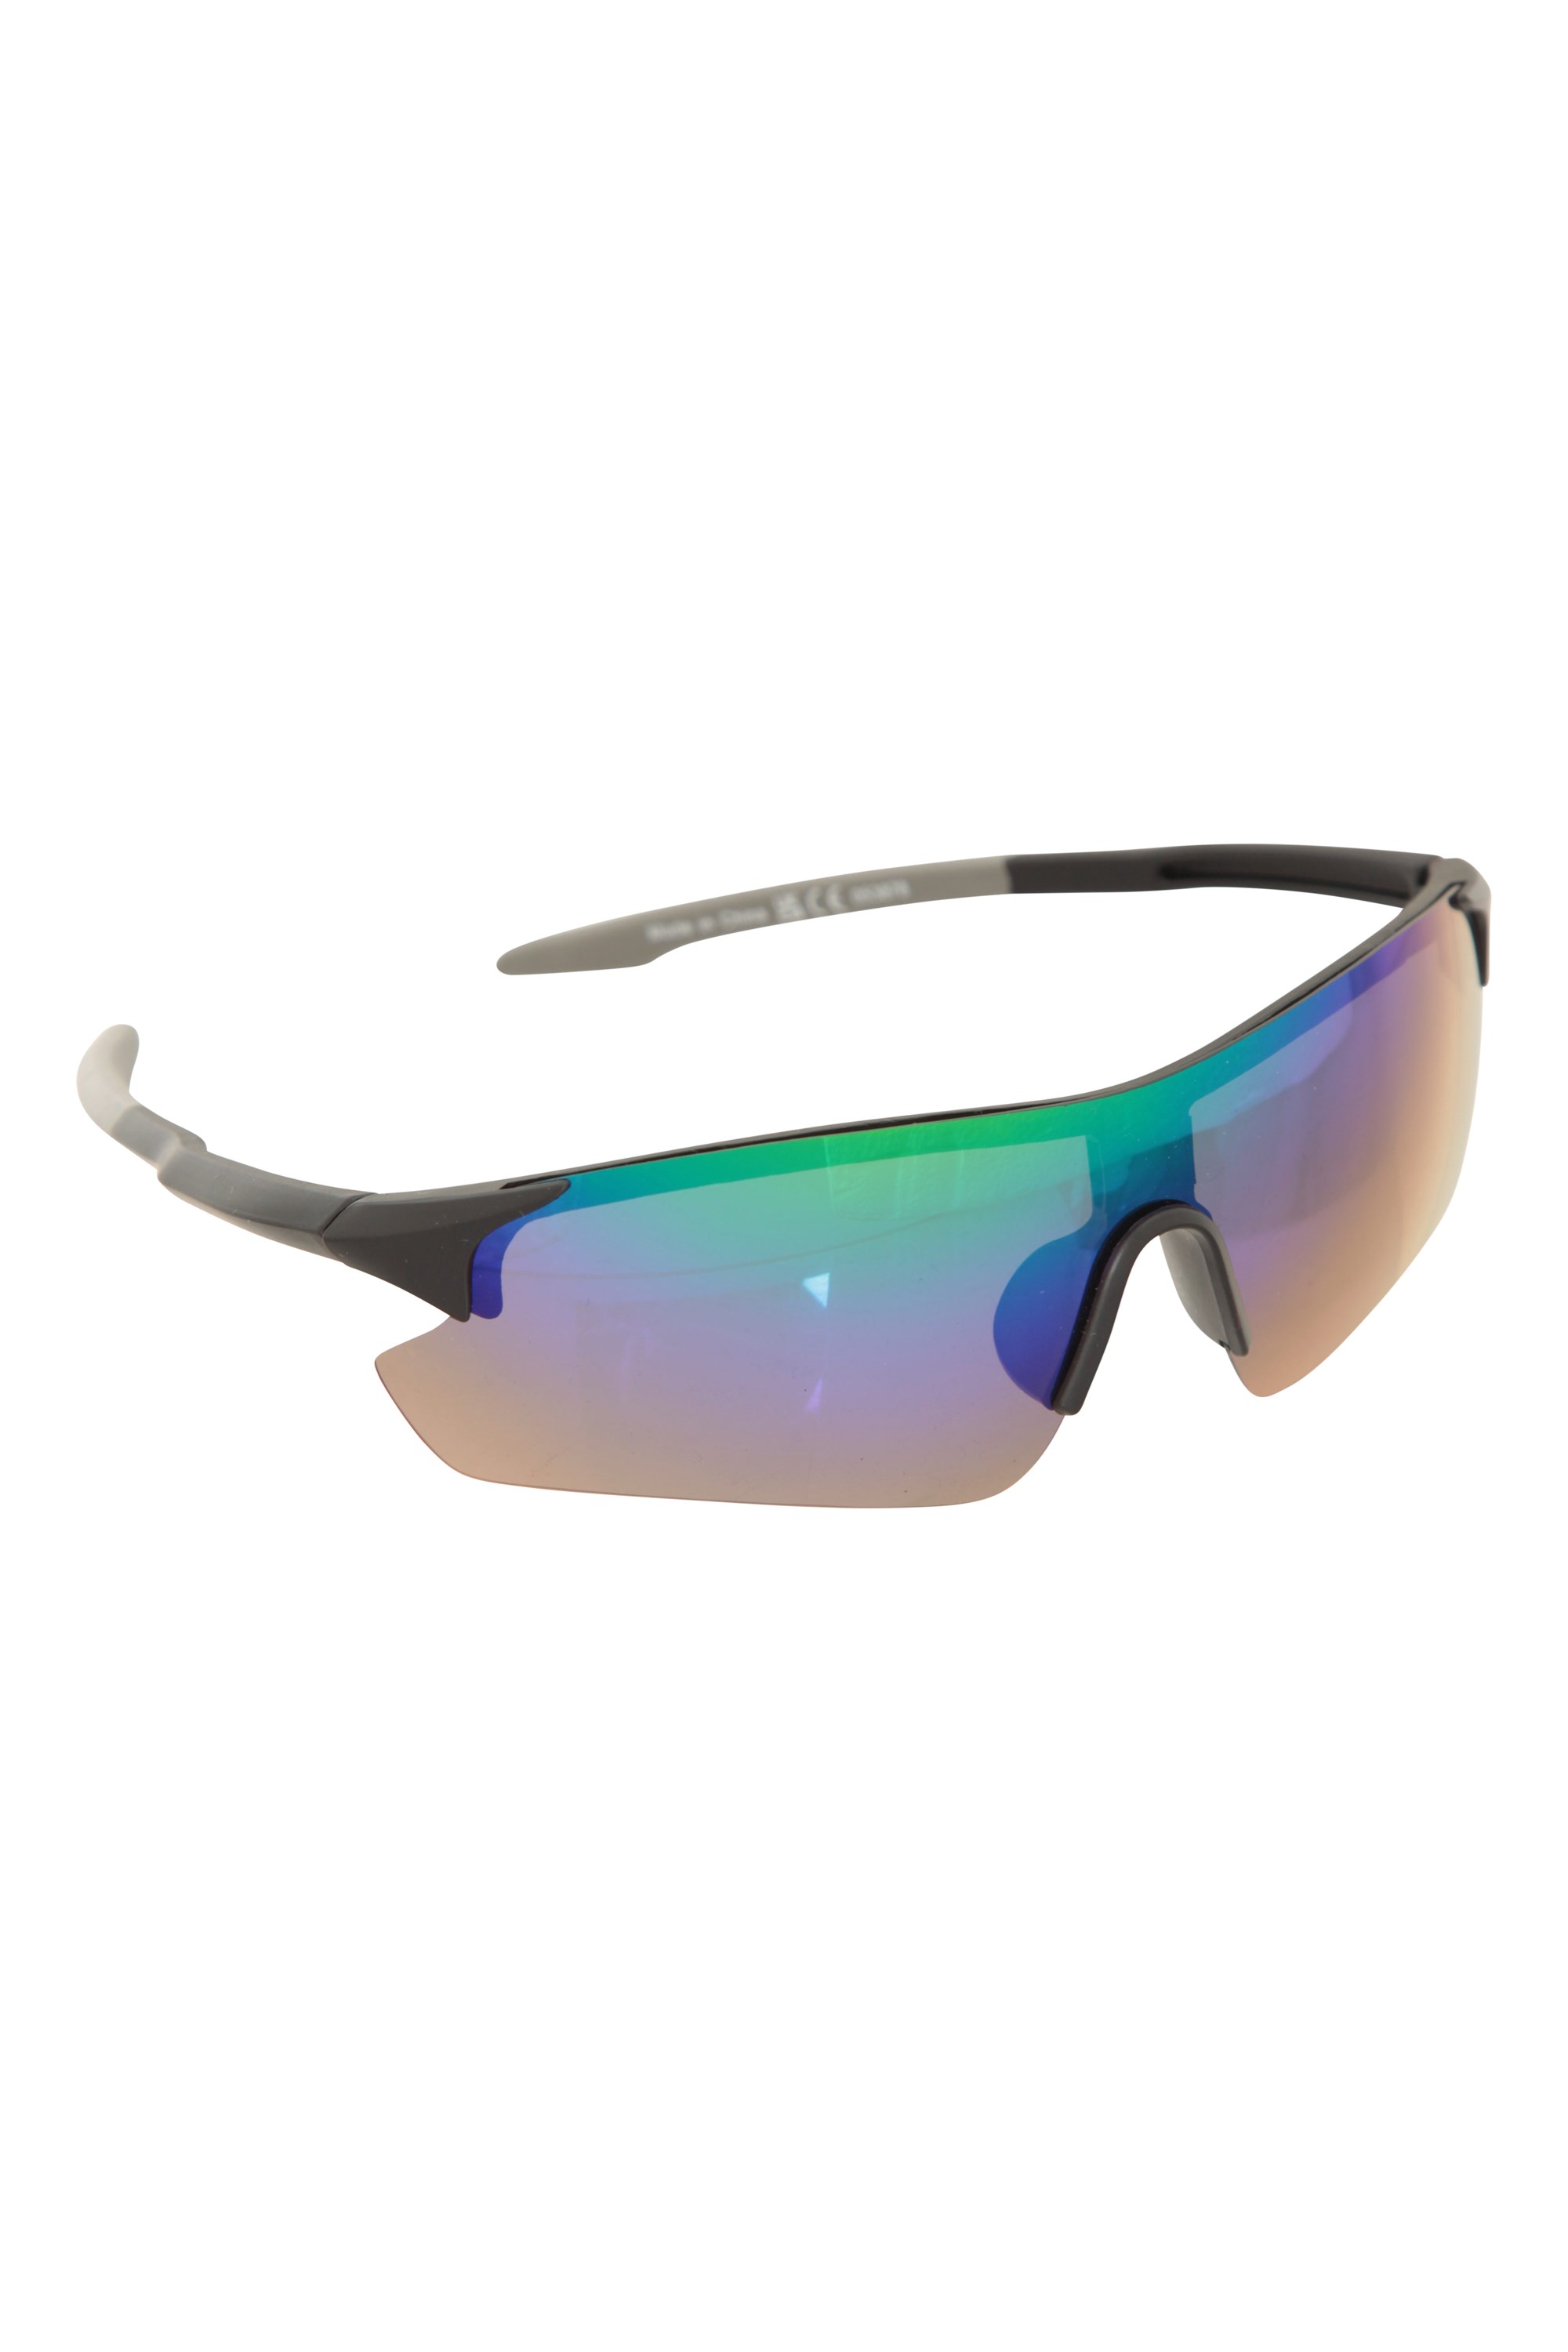 Mountain Warehouse Polarised Cycling Sunglasses Lightweight Sports Eyewear Men's Black Accessories